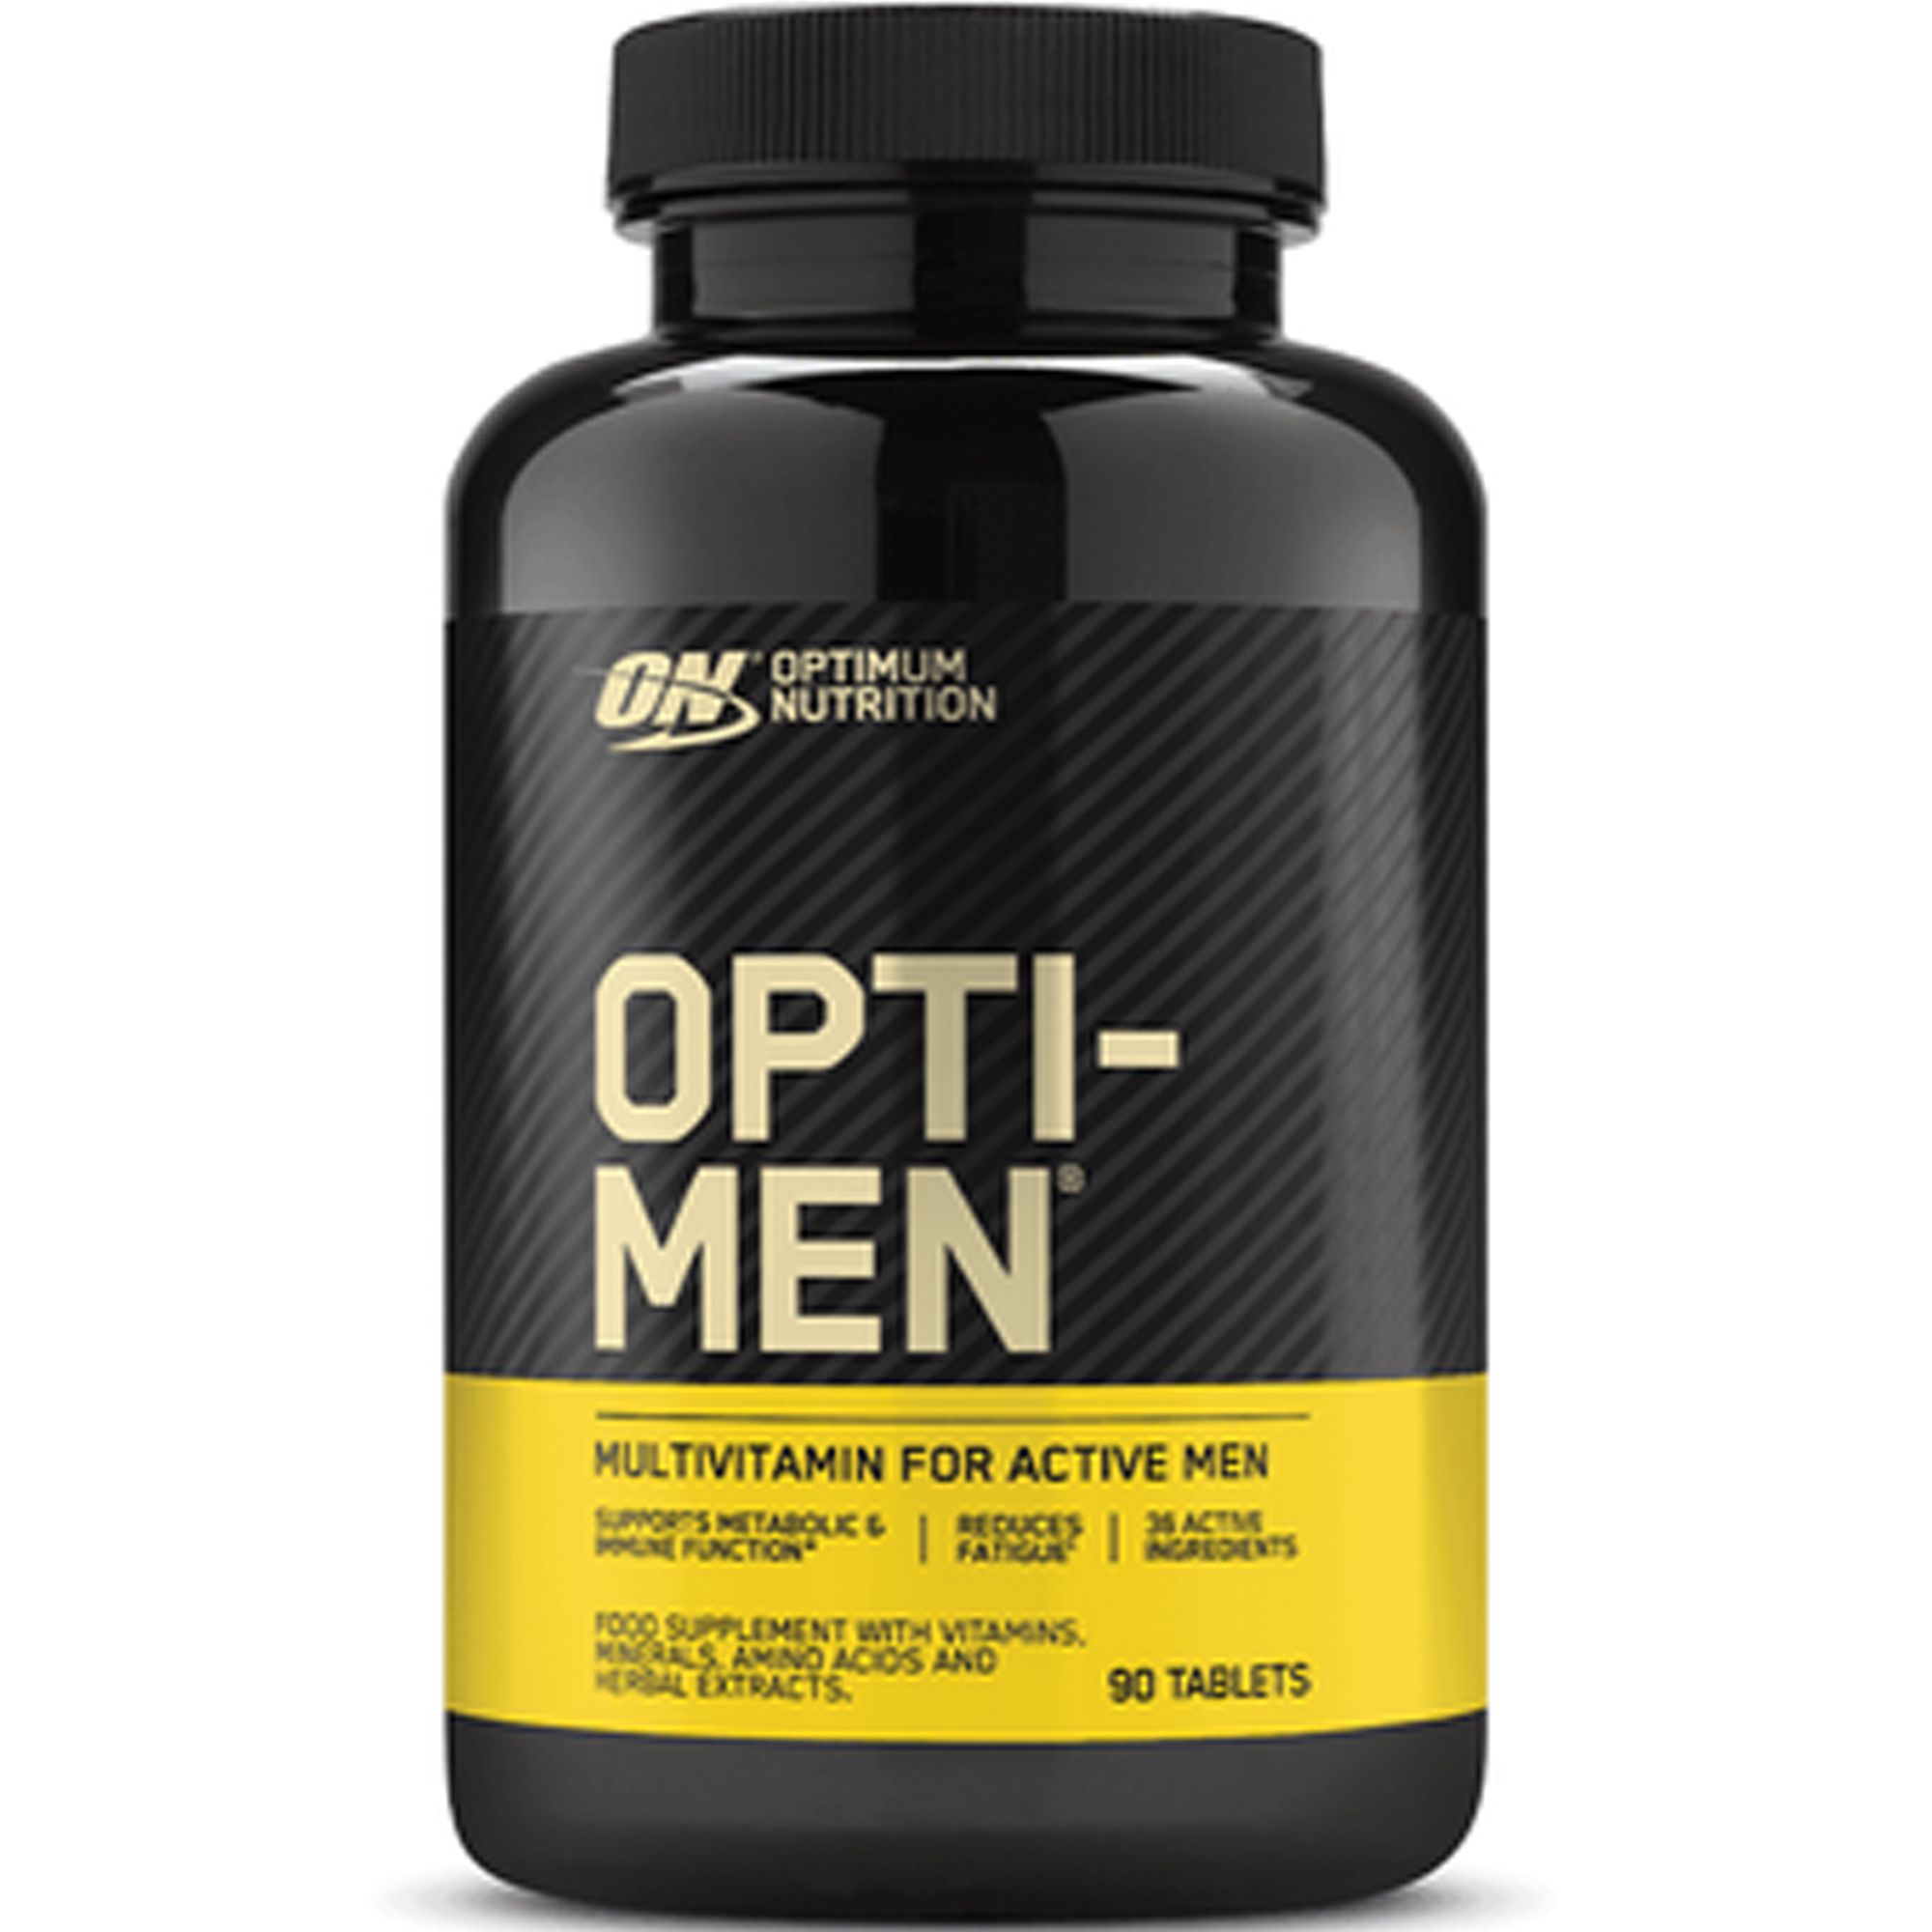 Opti-Men - mit 30 aktive Wirkstoffen - Vitamine, Mineralien, Aminosäuren und Kräuter - 90 Tabletten